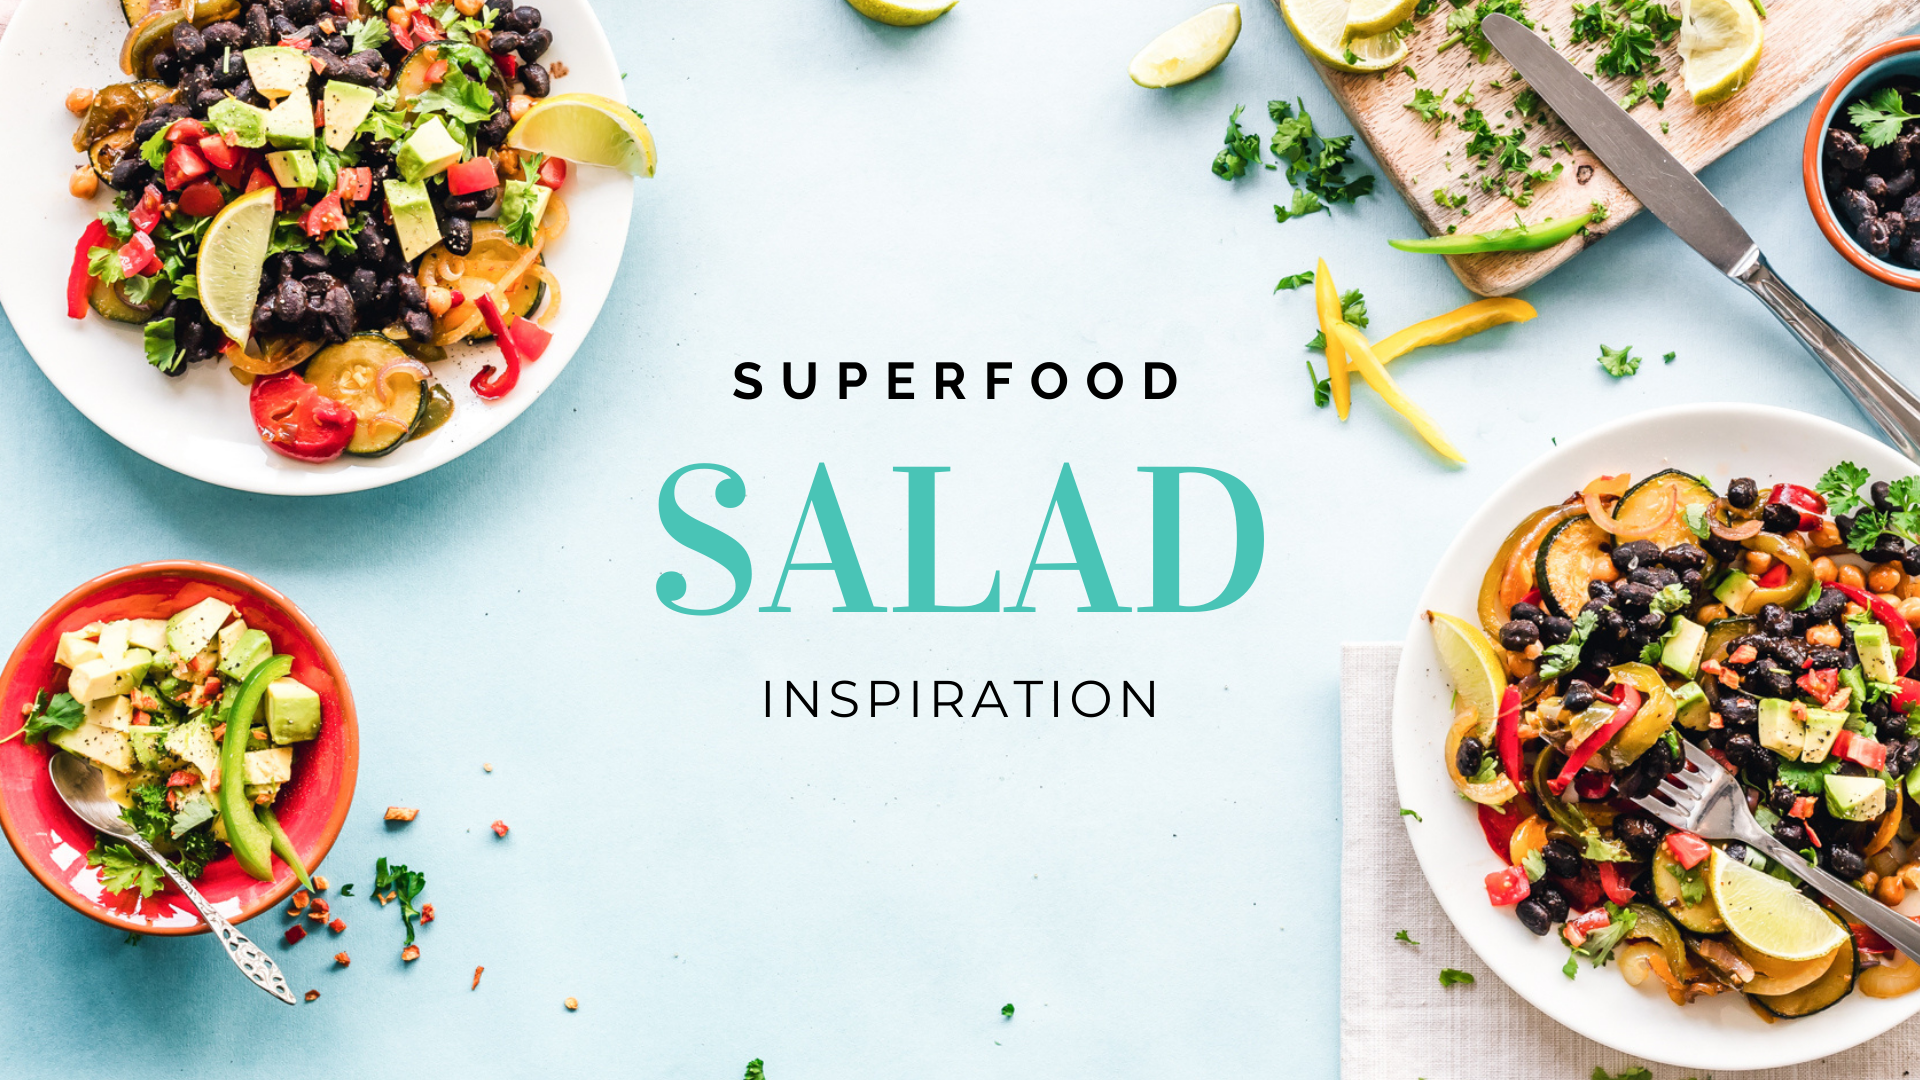 Superfood Salad Inspiration